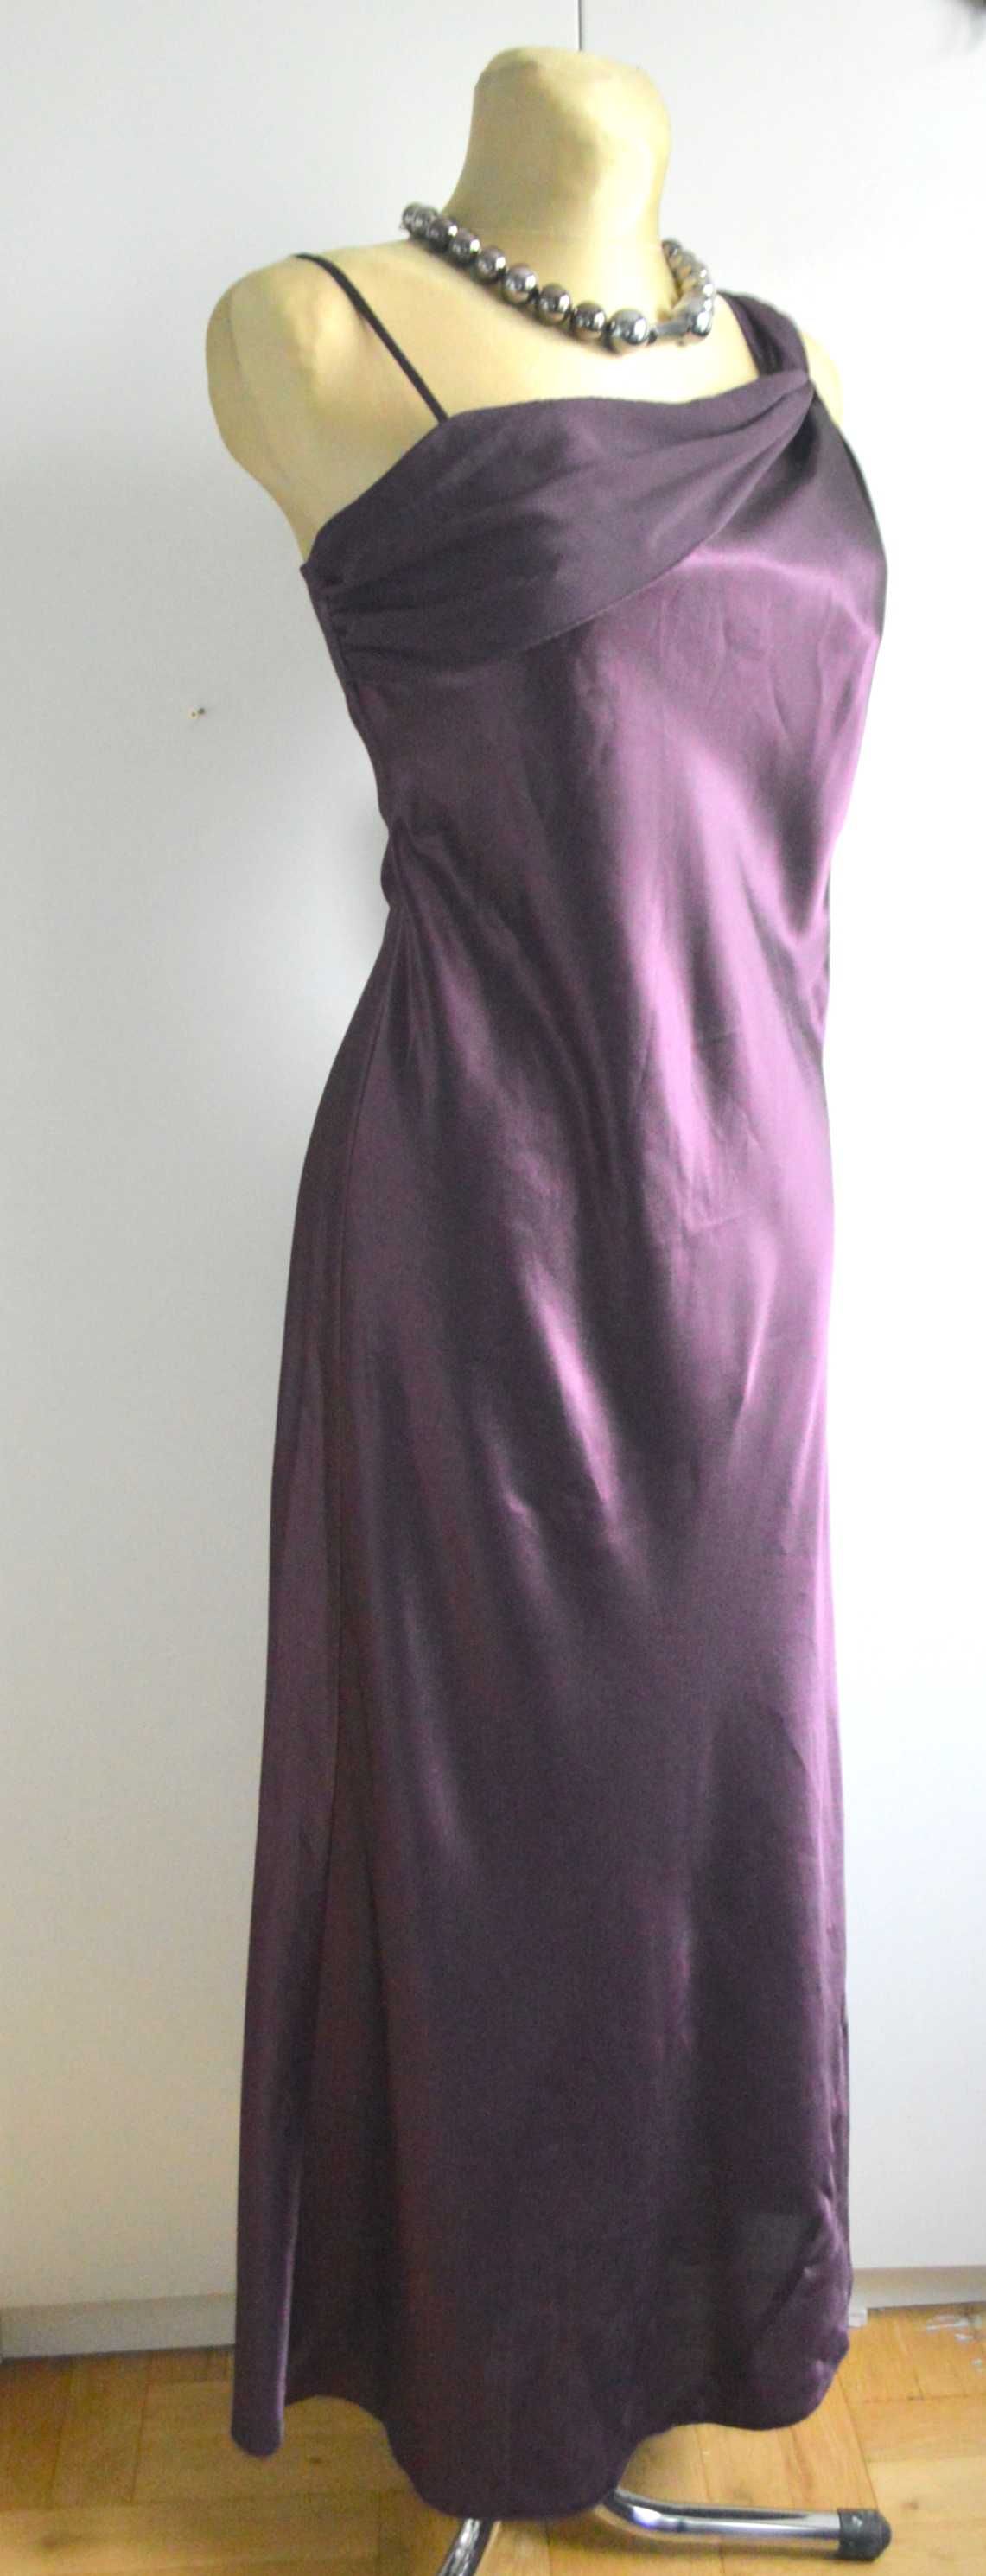 Yessica C&A sukienka piękna śliwkowa L/XL minimalizm maxi